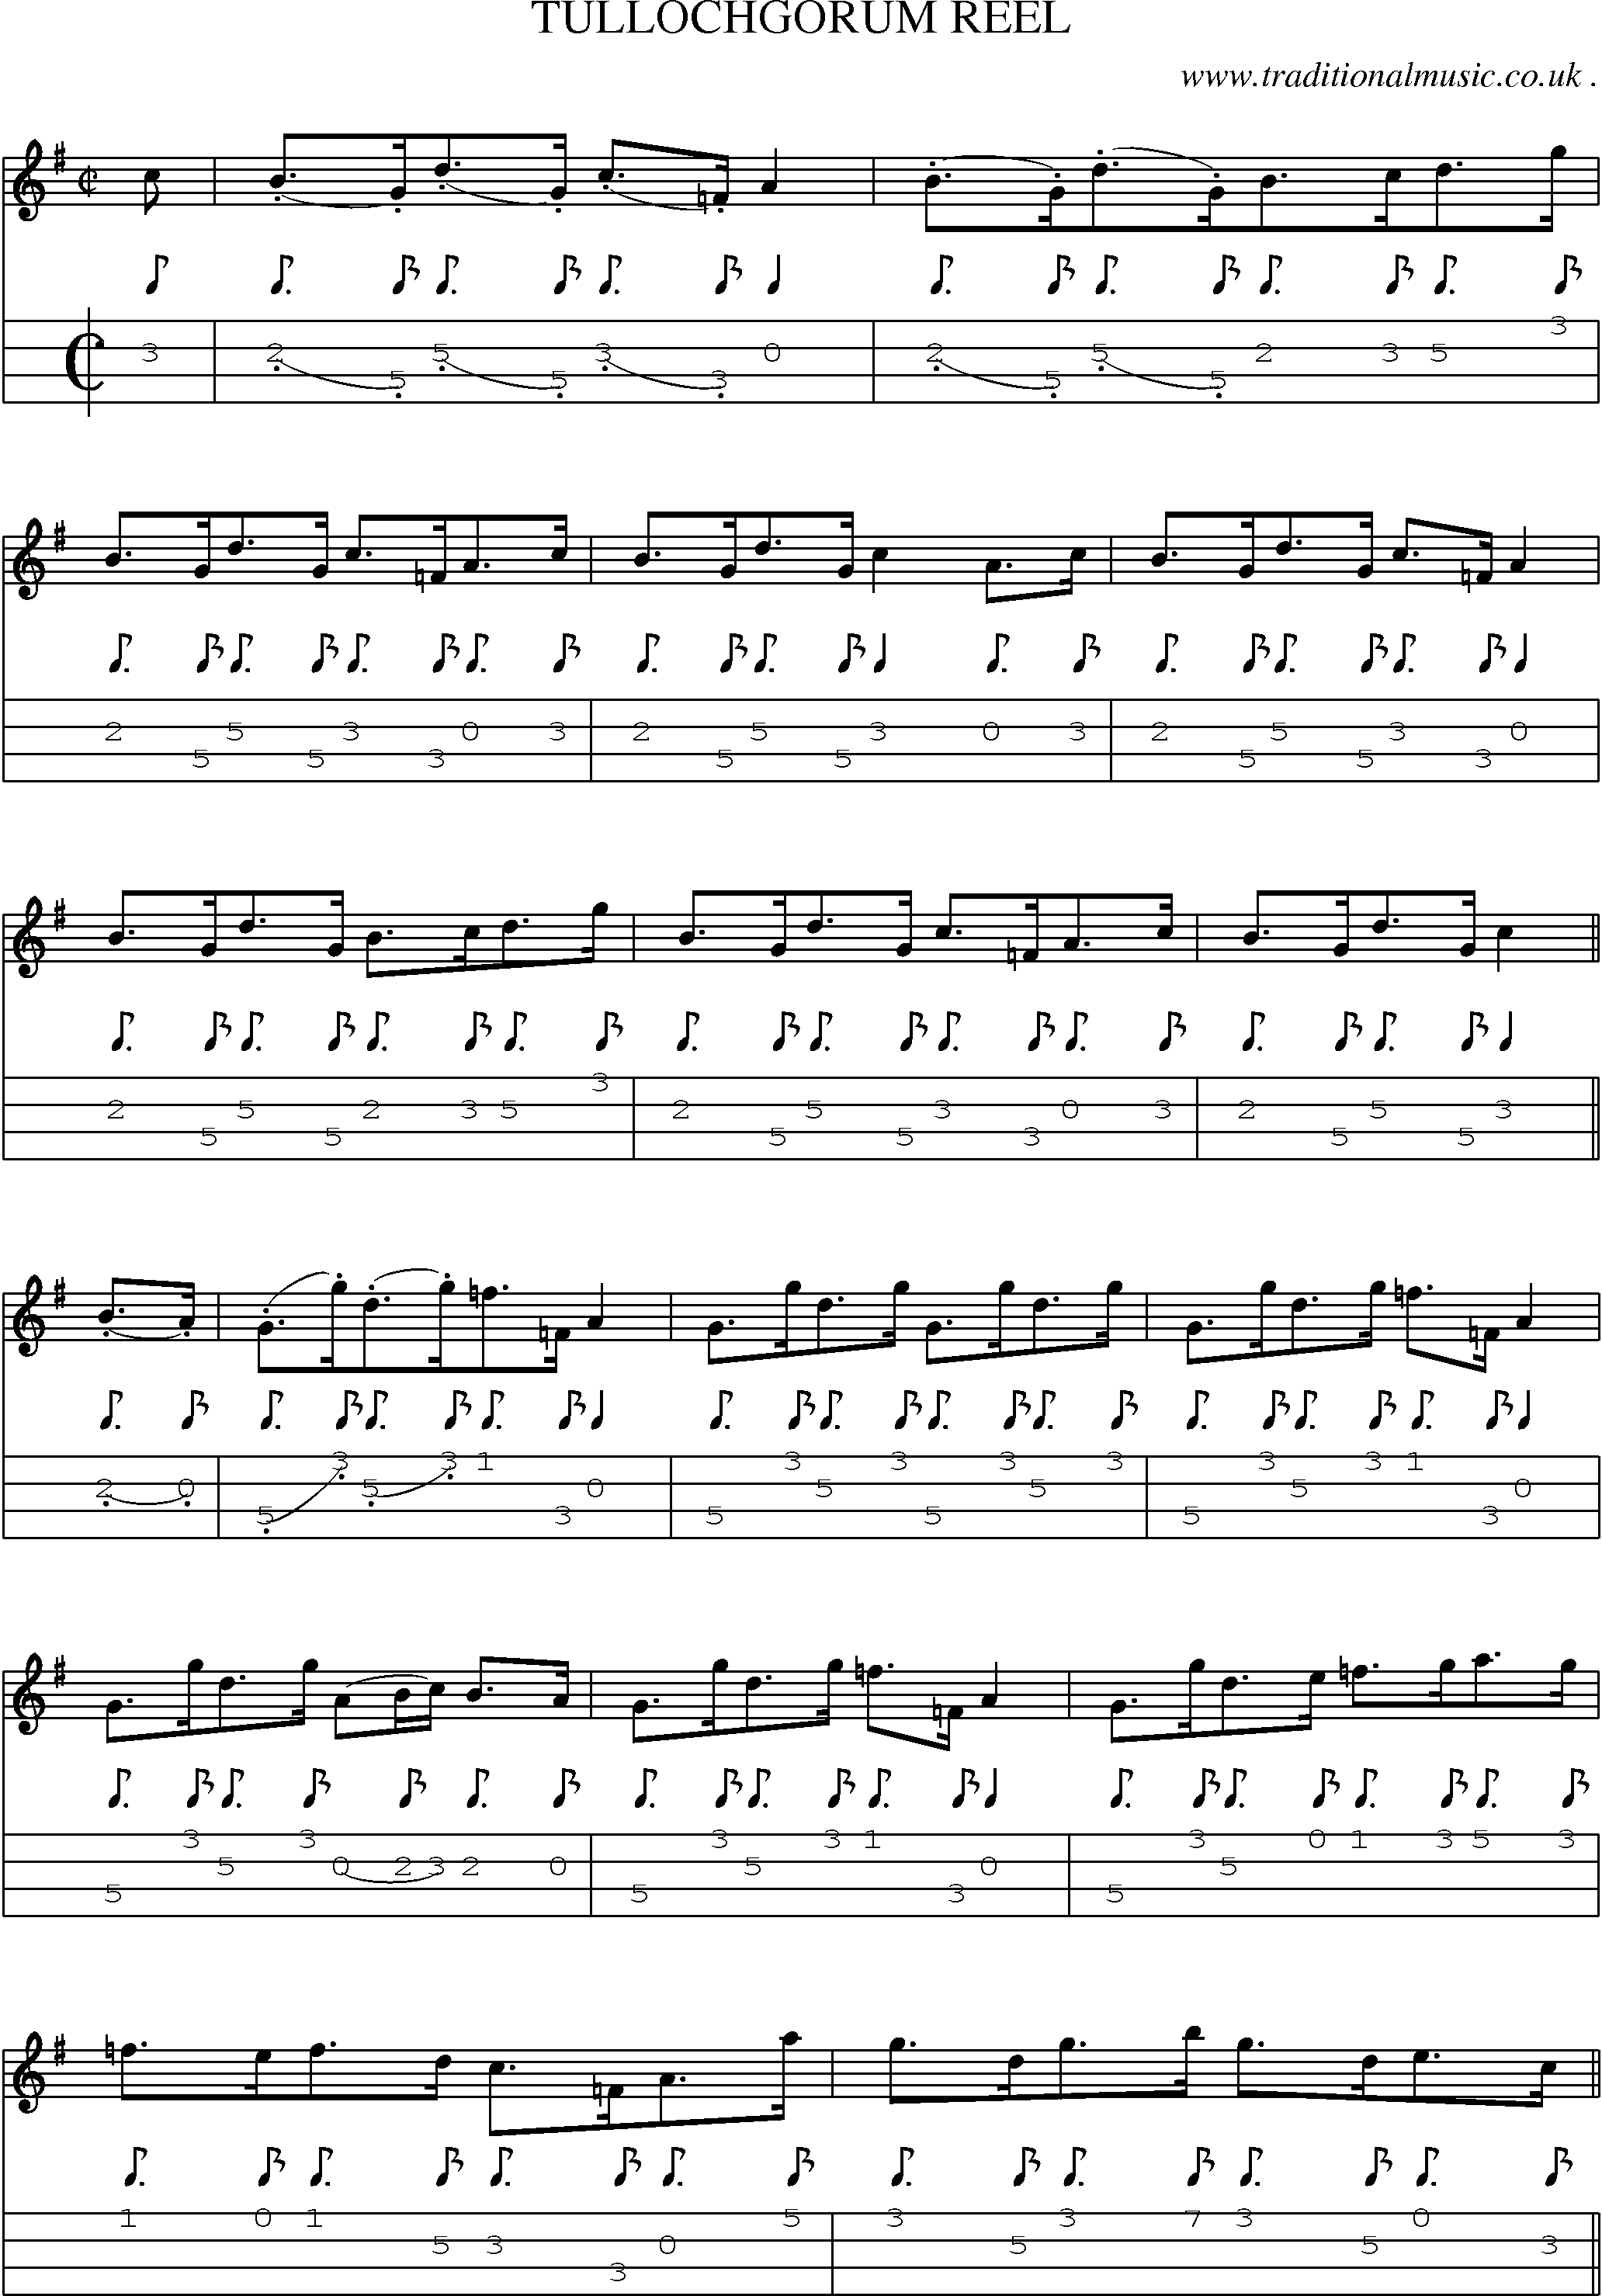 Sheet-Music and Mandolin Tabs for Tullochgorum Reel